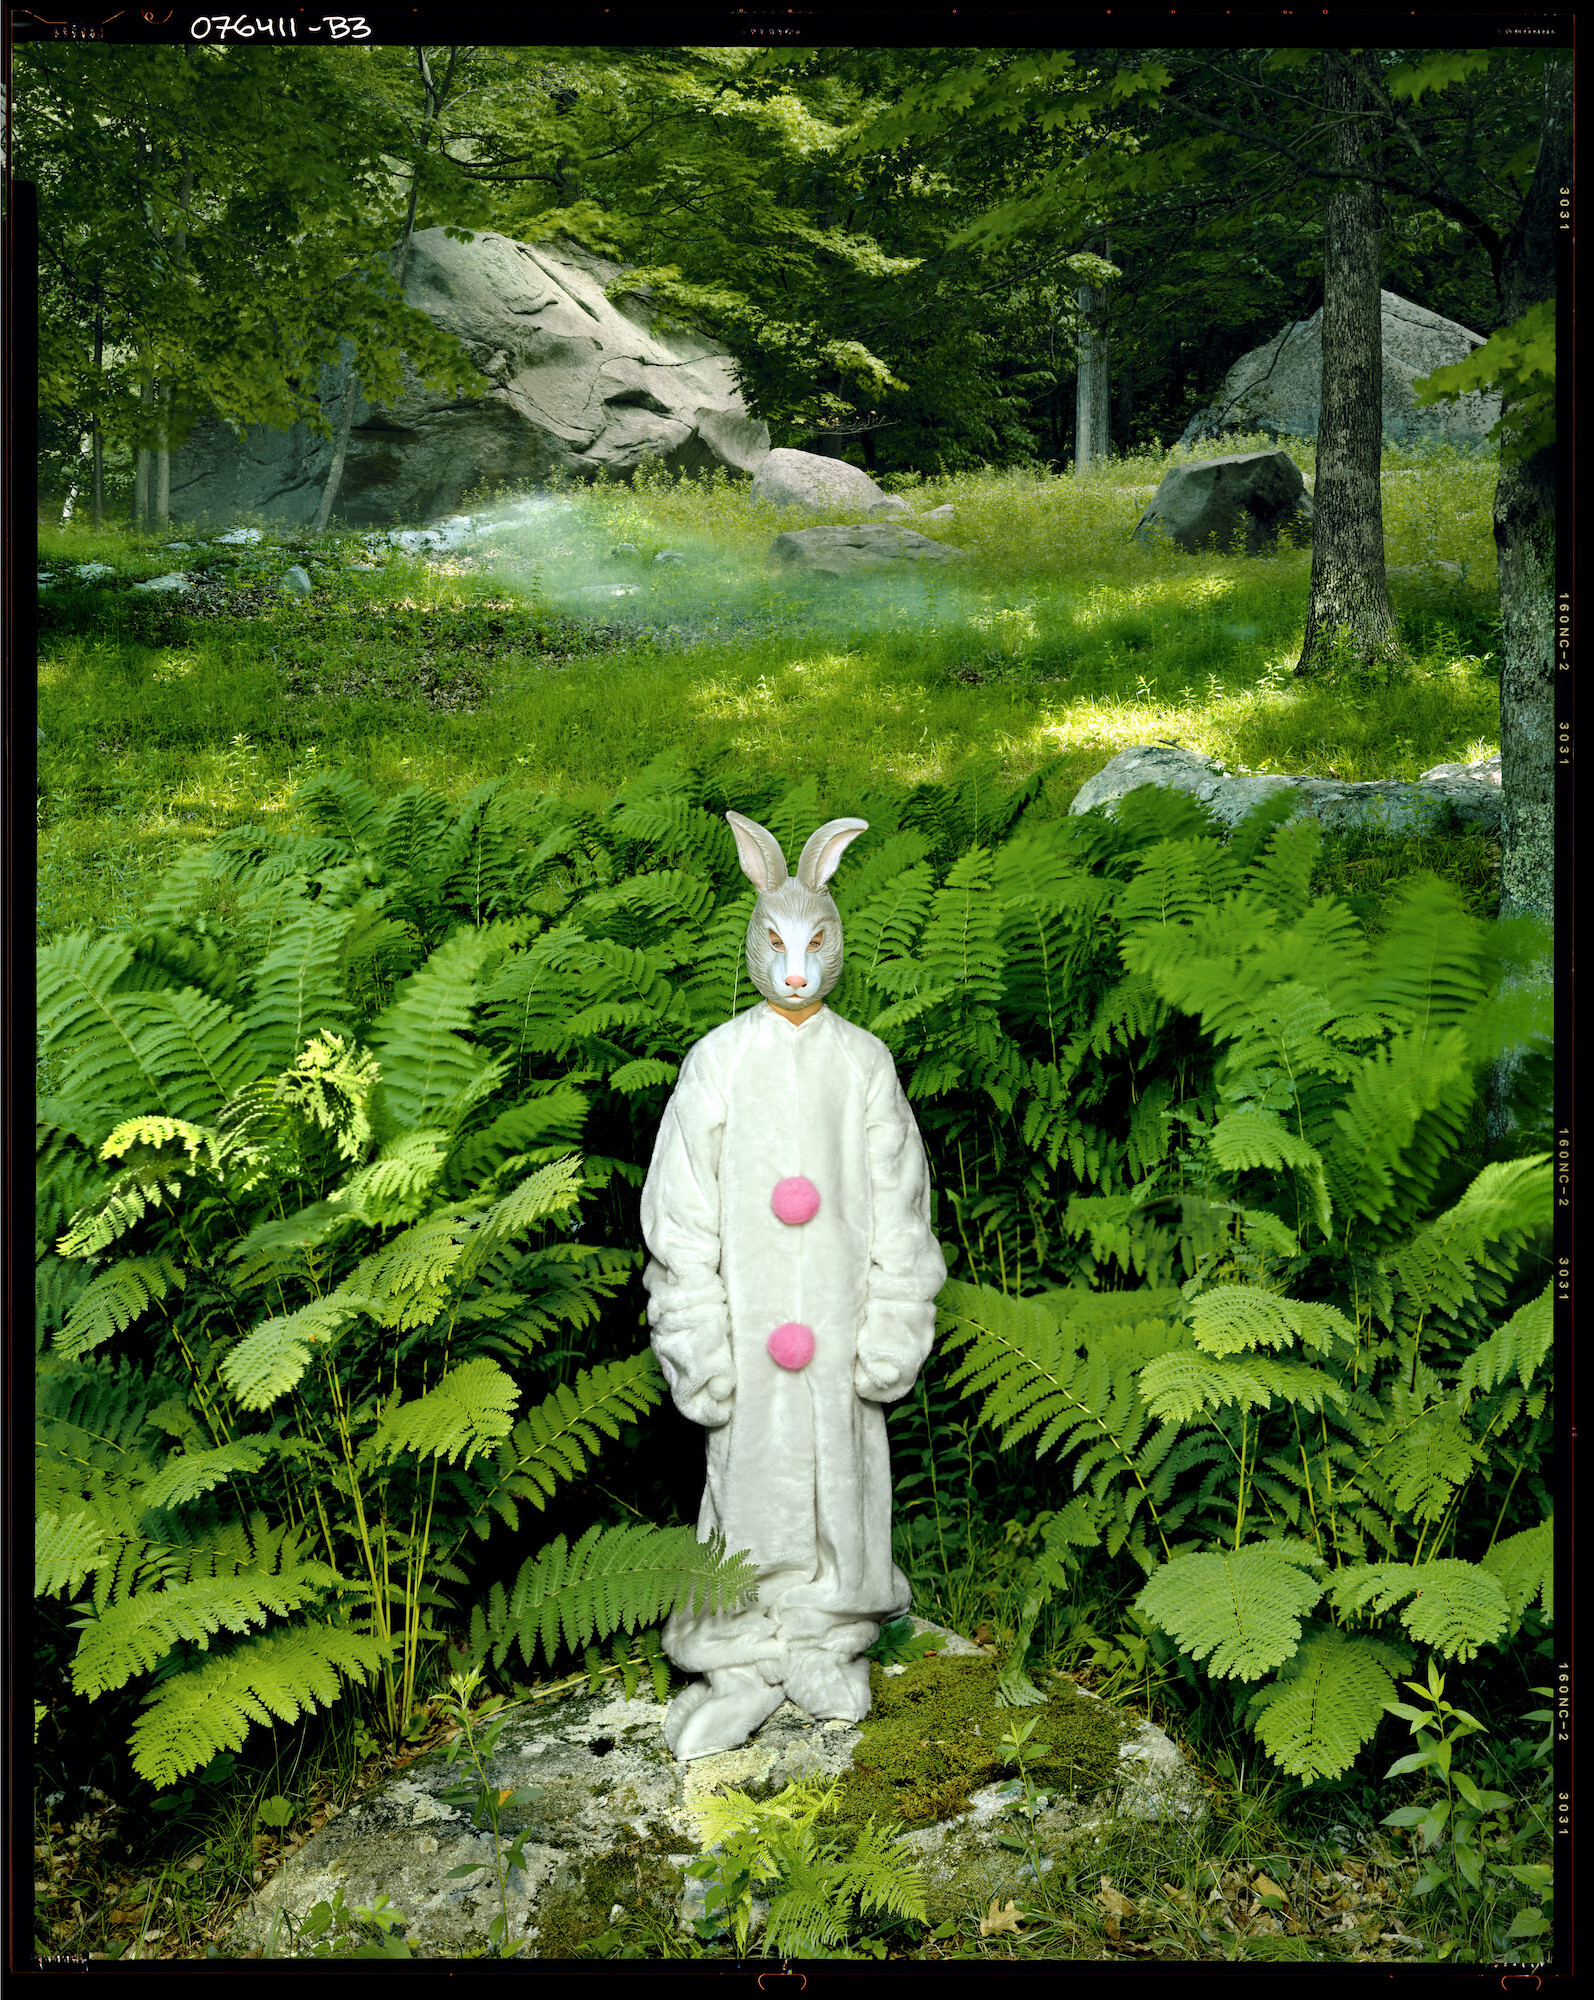 Calliethe Rabbit, Шерман, Коннектикут, 2008 год. Фотограф Альберт Уотсон